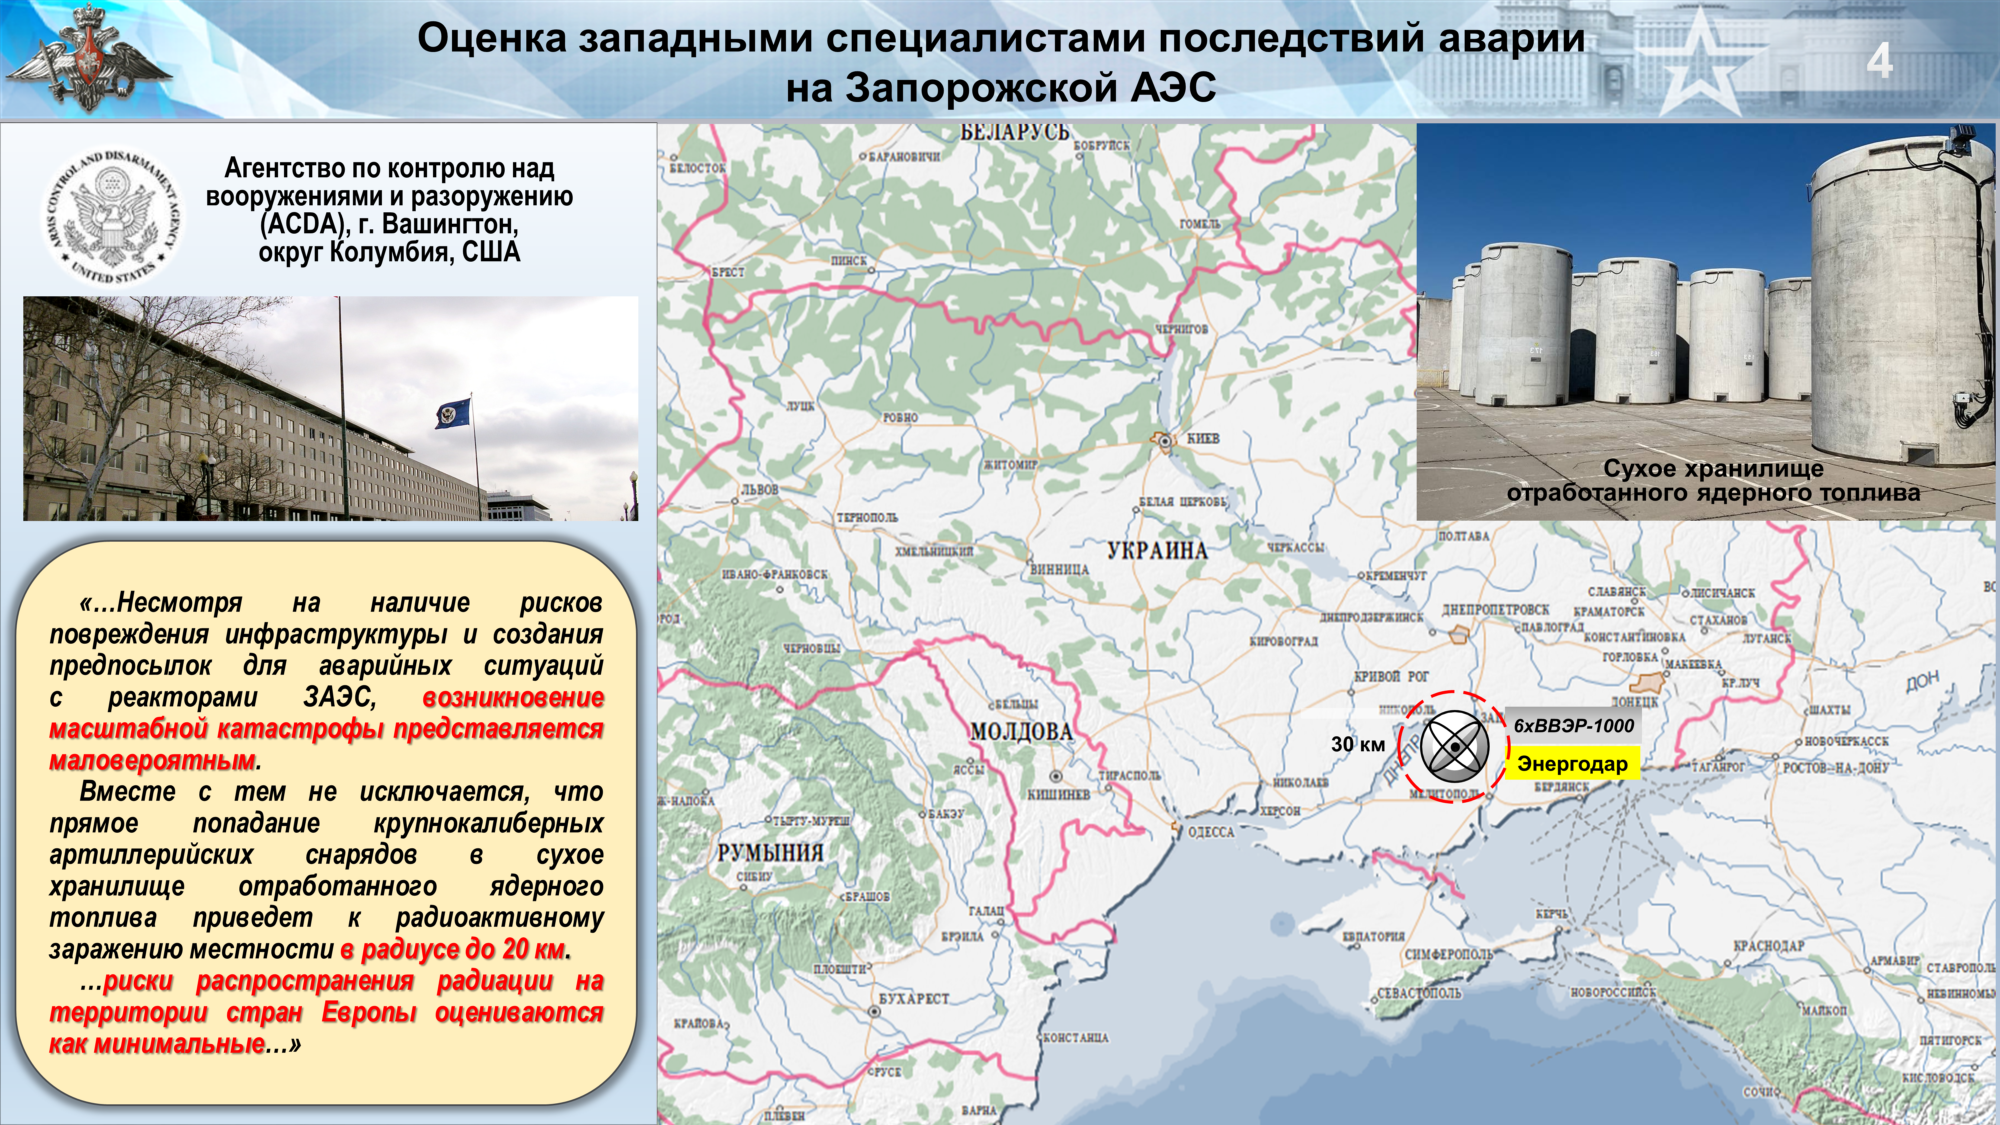 Запорожская аэс на карте где расположена. Запорожская АЭС на карте Украины 2022. Запорожская атомная электростанция на карте Украины. Атомная станция в Запорожье на карте. Карта Запорожская АЭС на карте.